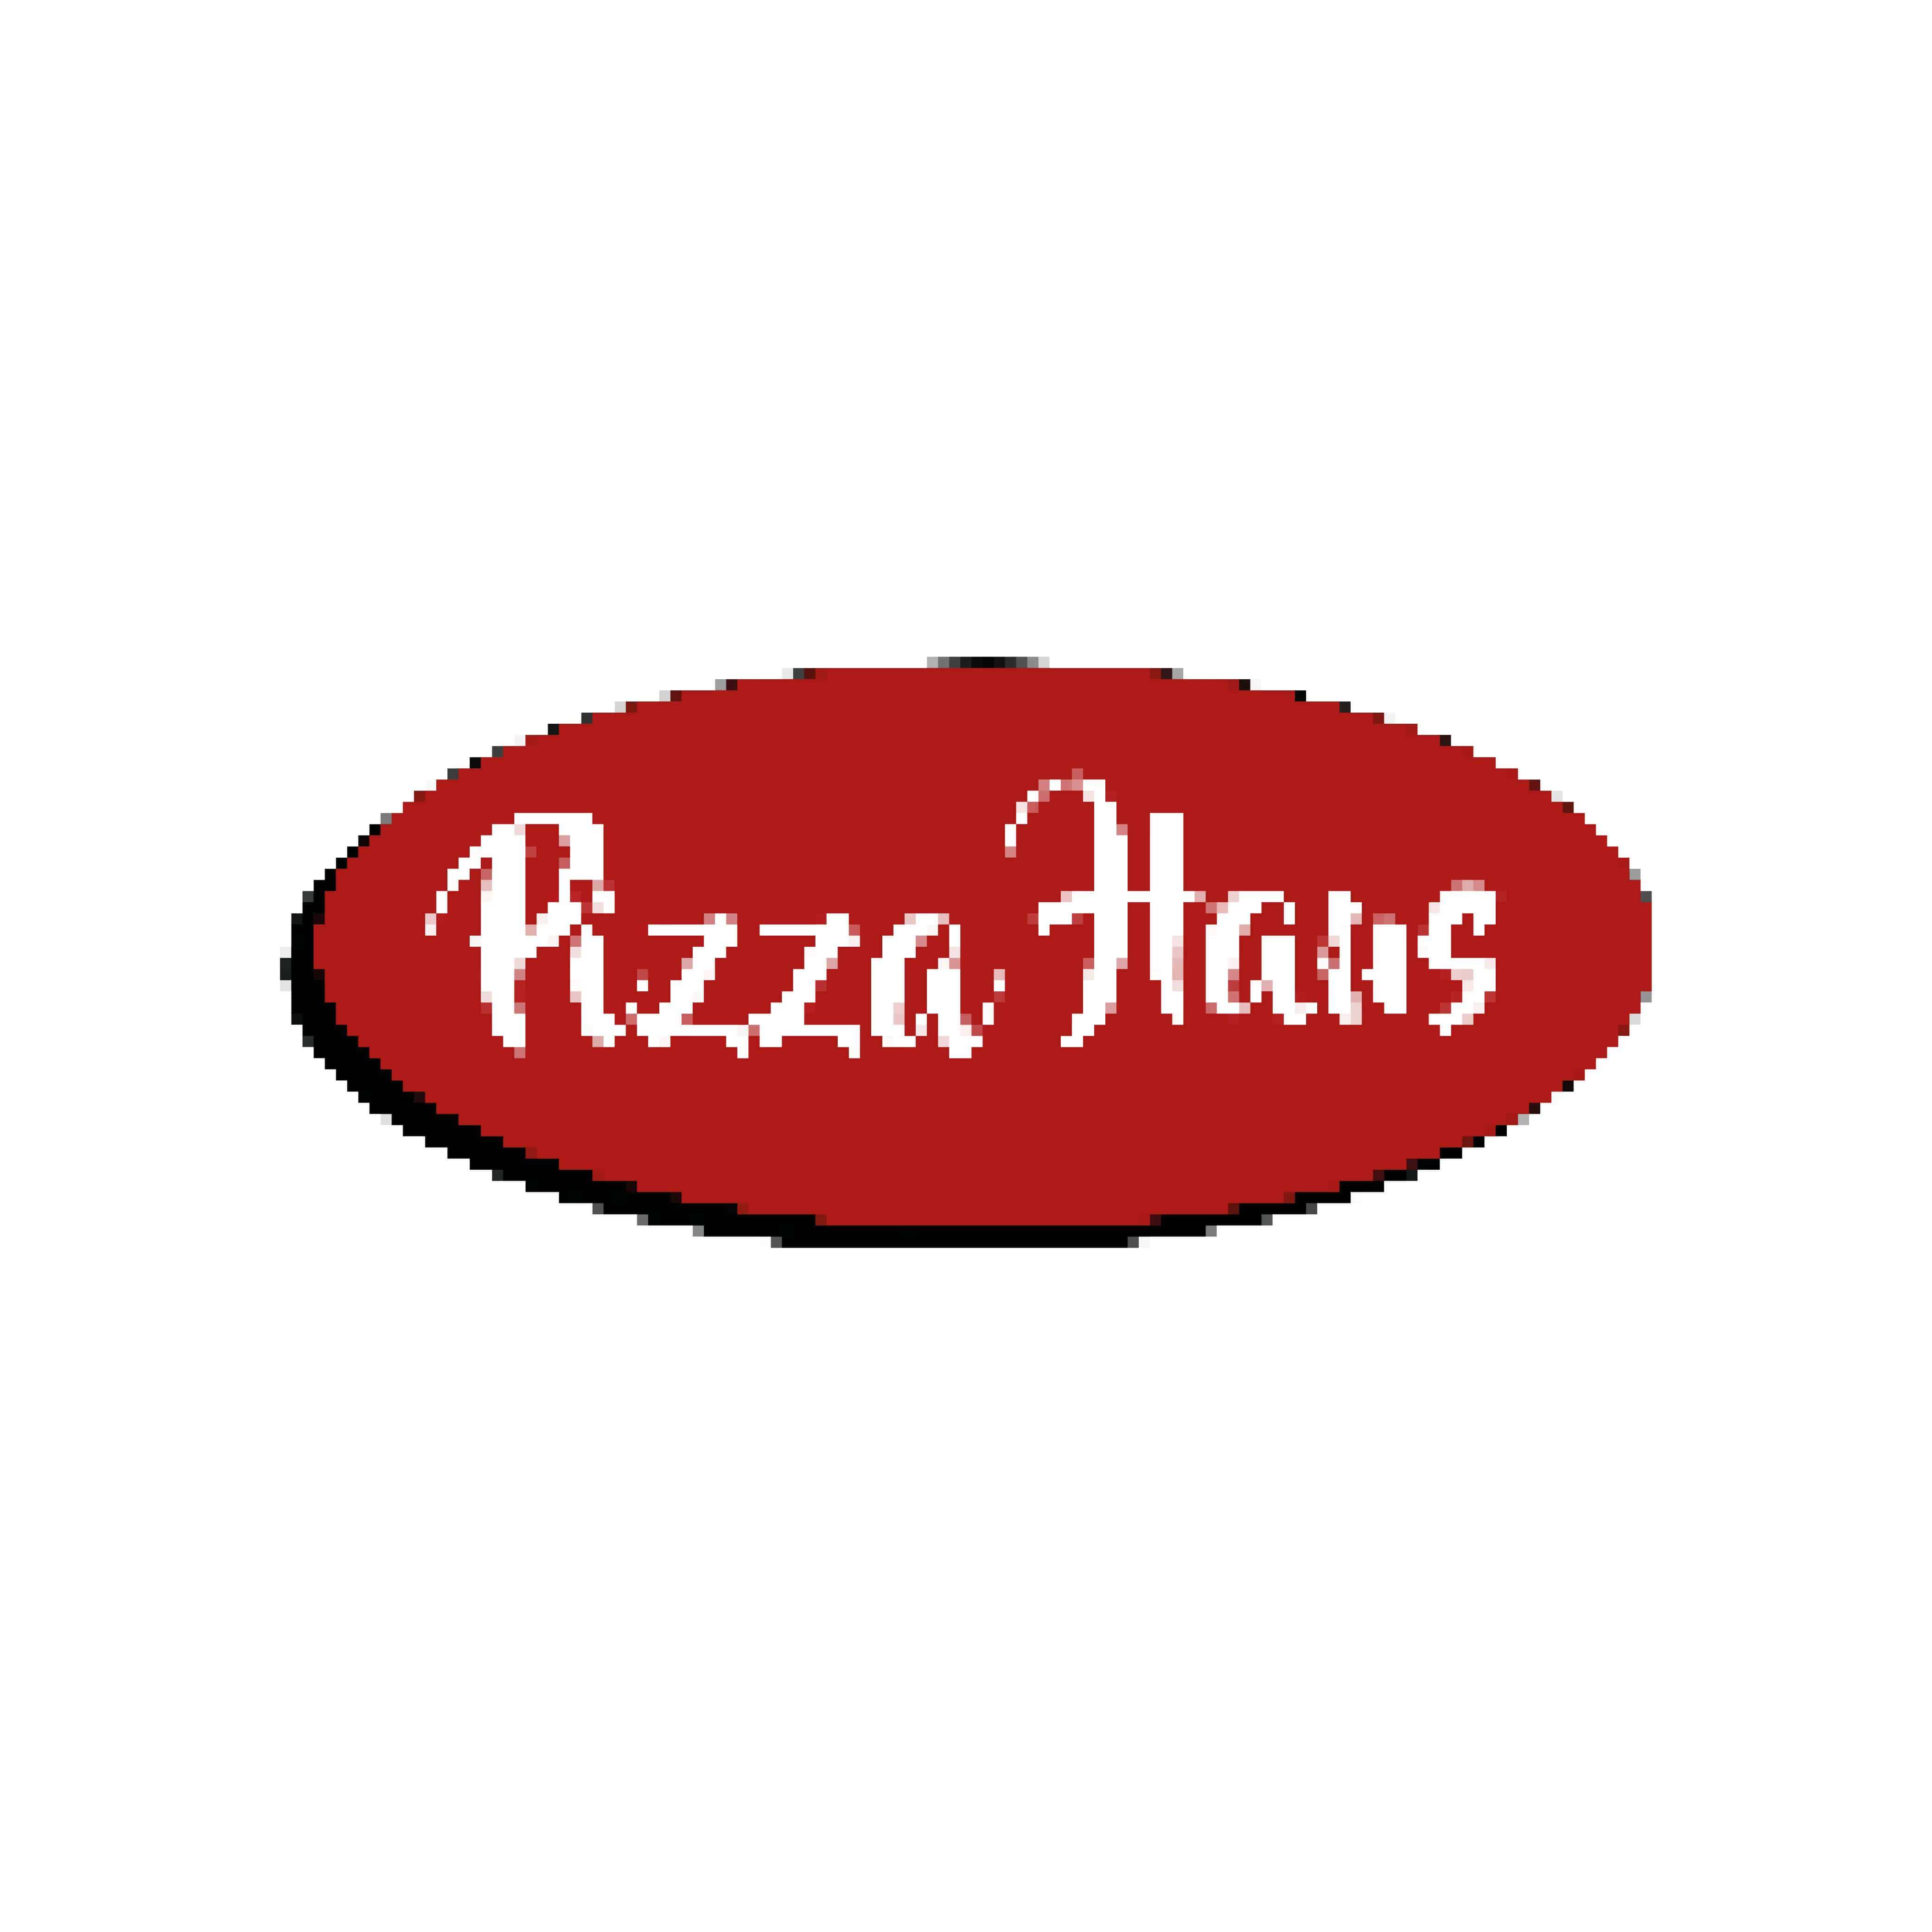 Pizza Haus